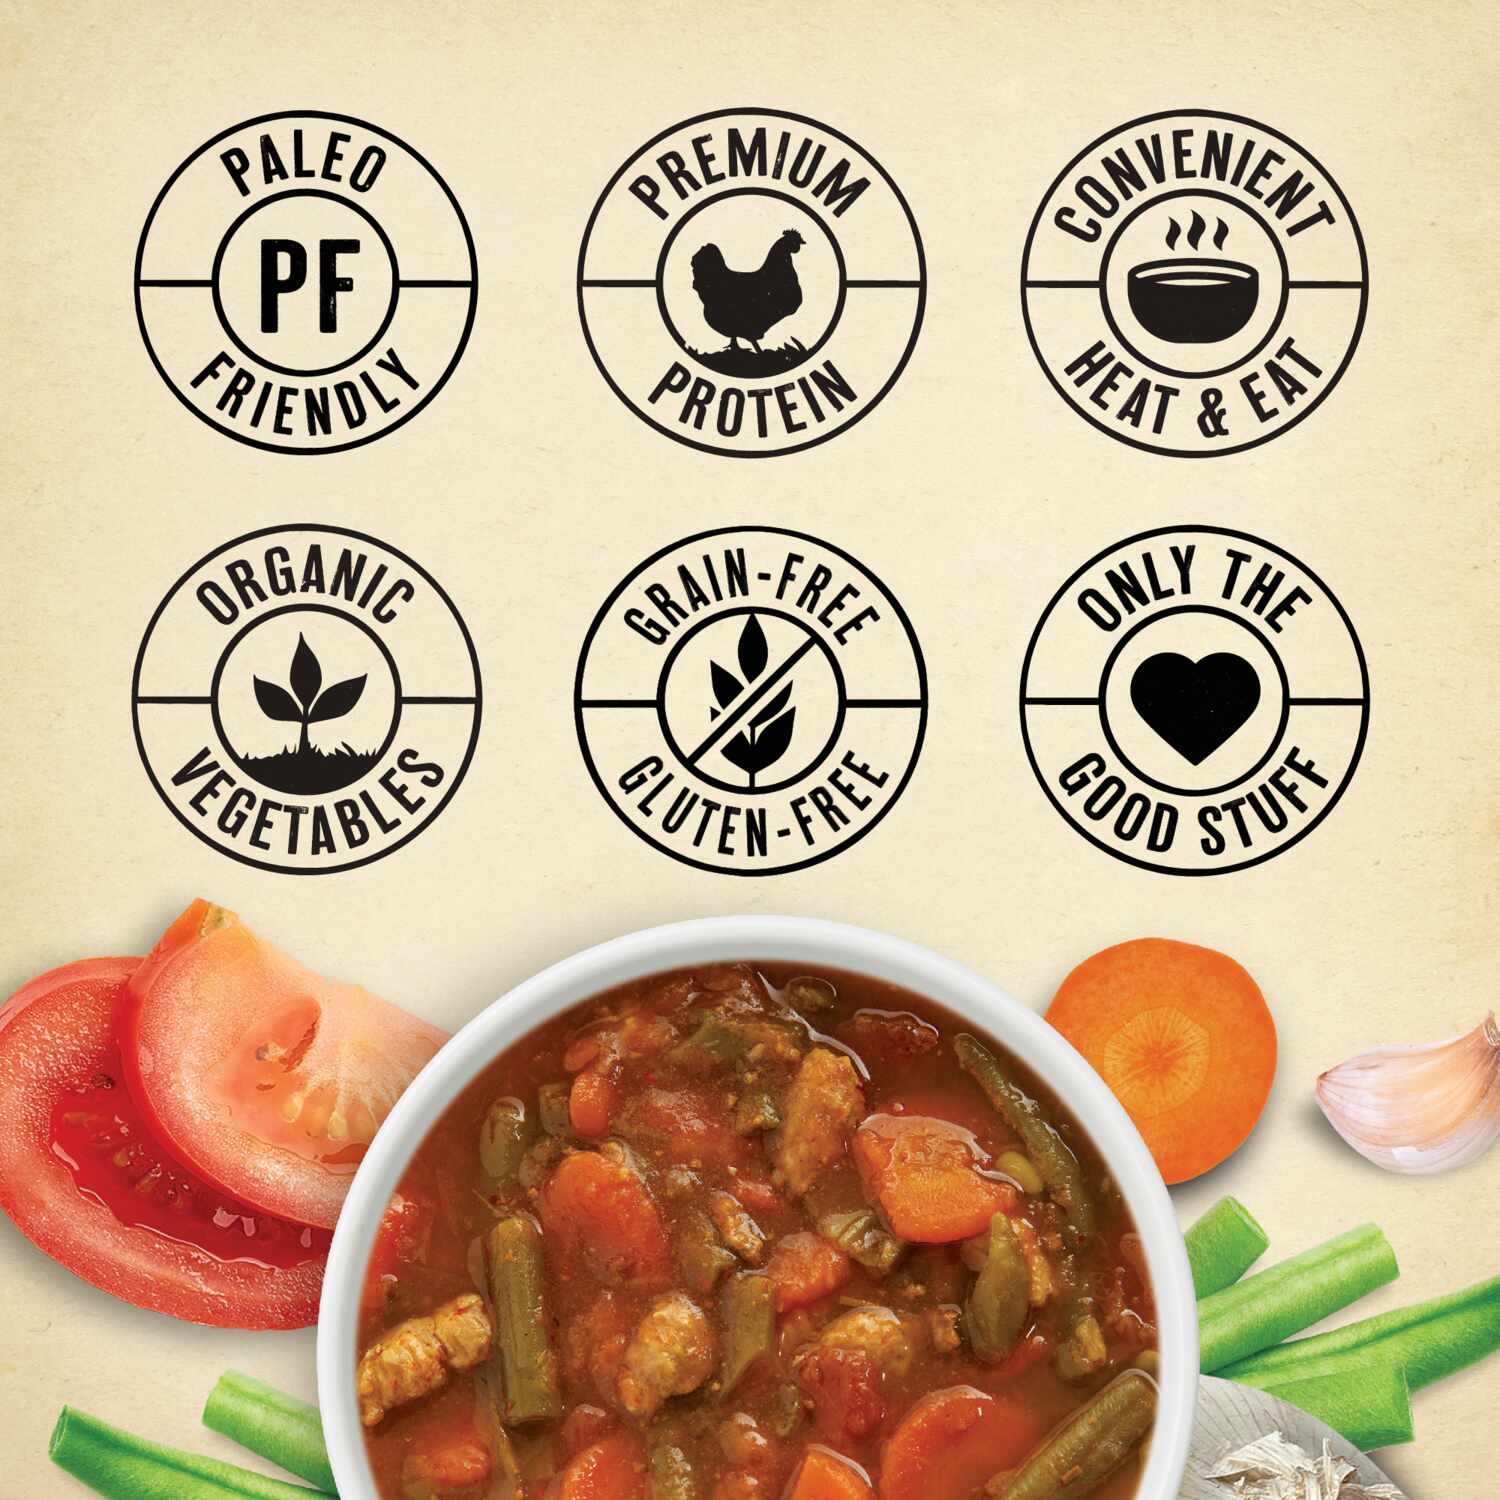 True Primal Chicken & Vegetable Soup benefits